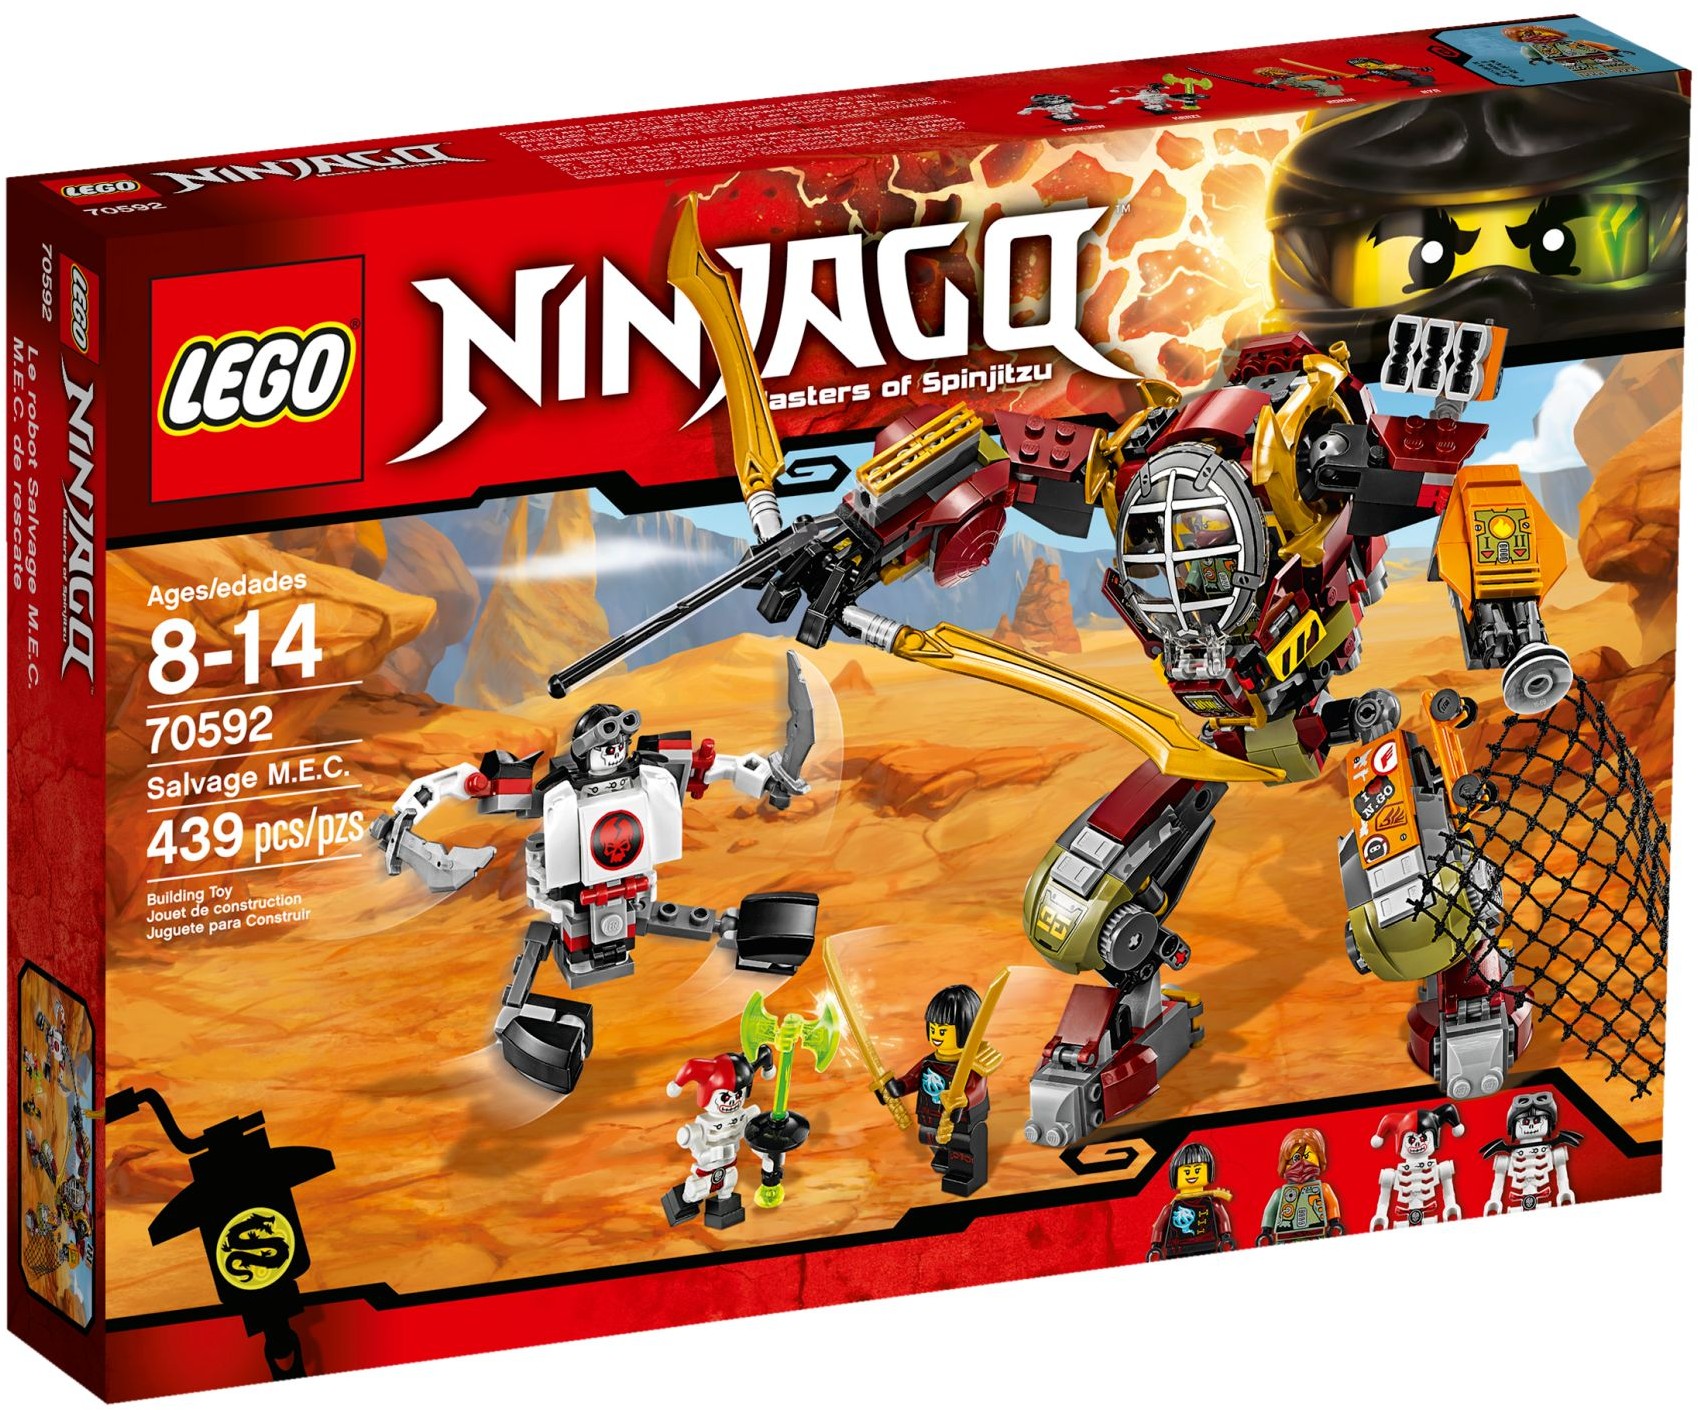 Oppervlakkig bouw tegenkomen Lego 70592 Salvage M.E.C. - Lego Ninjago set for sale best price